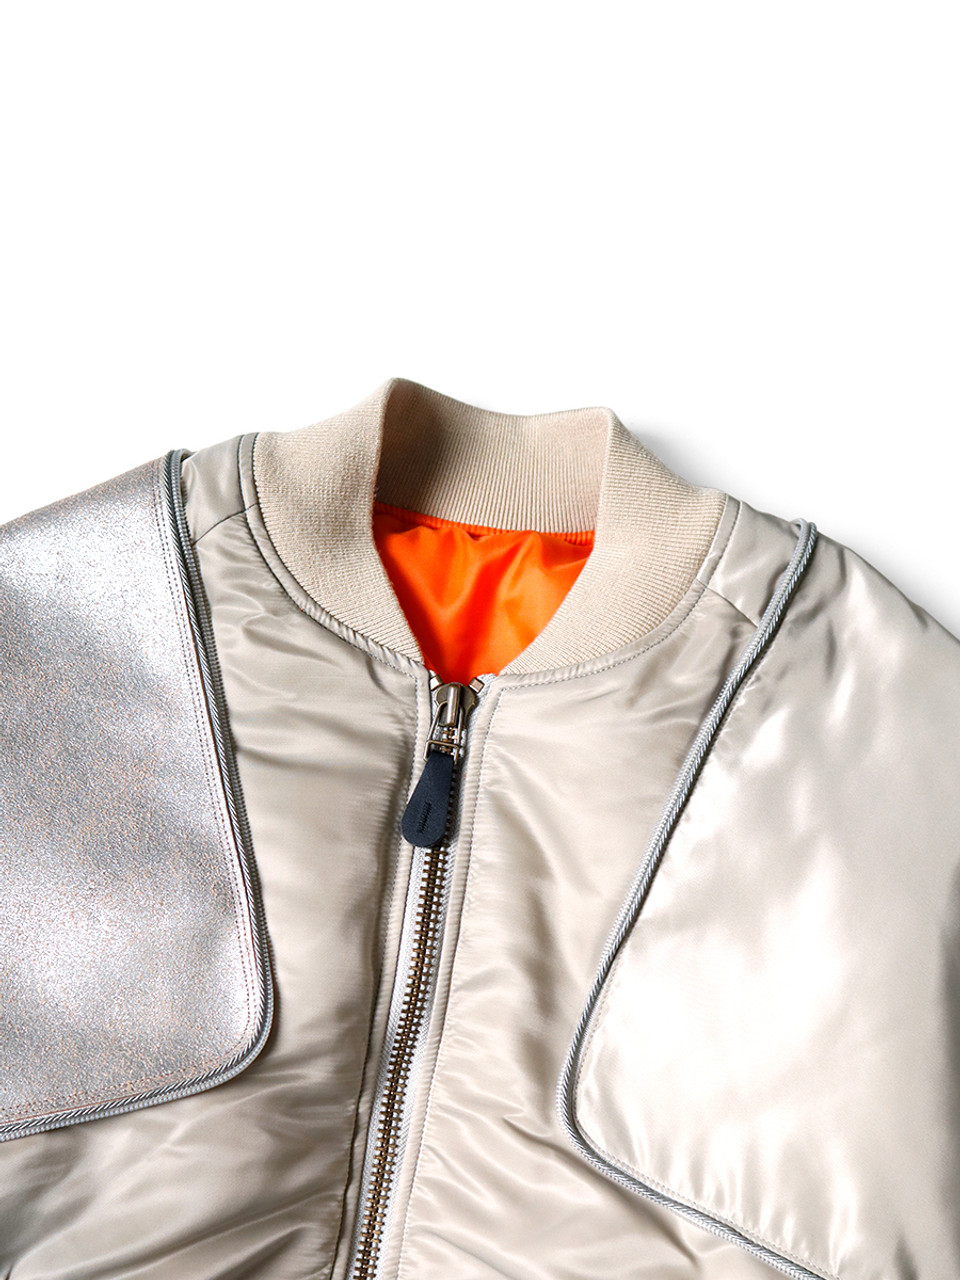 KAPITAL Jacket MA-1 Nylon x Crack Leather Siamese Bomber JKT